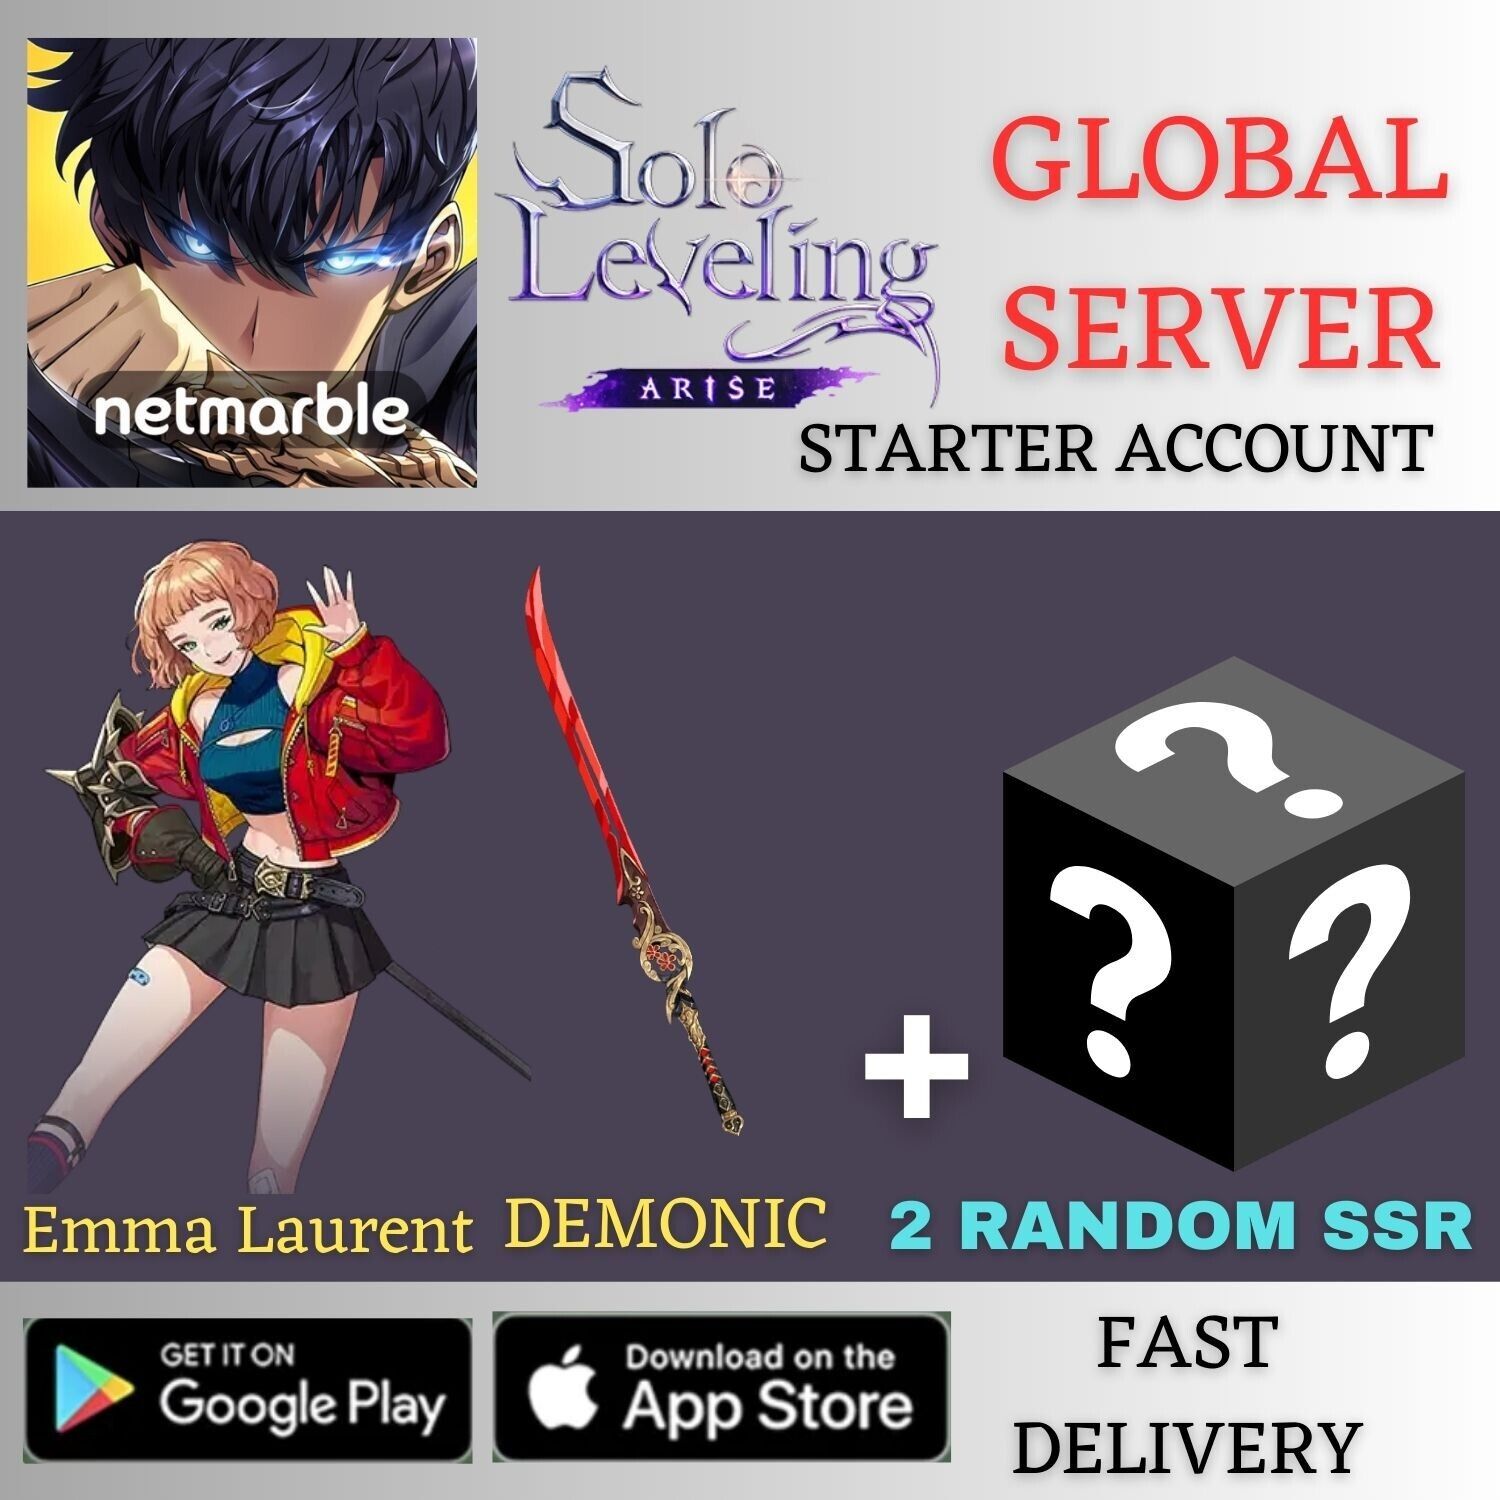 Solo Leveling Arise [Global Server] Emma Laurent + Demonic+ 2random SSR Starter